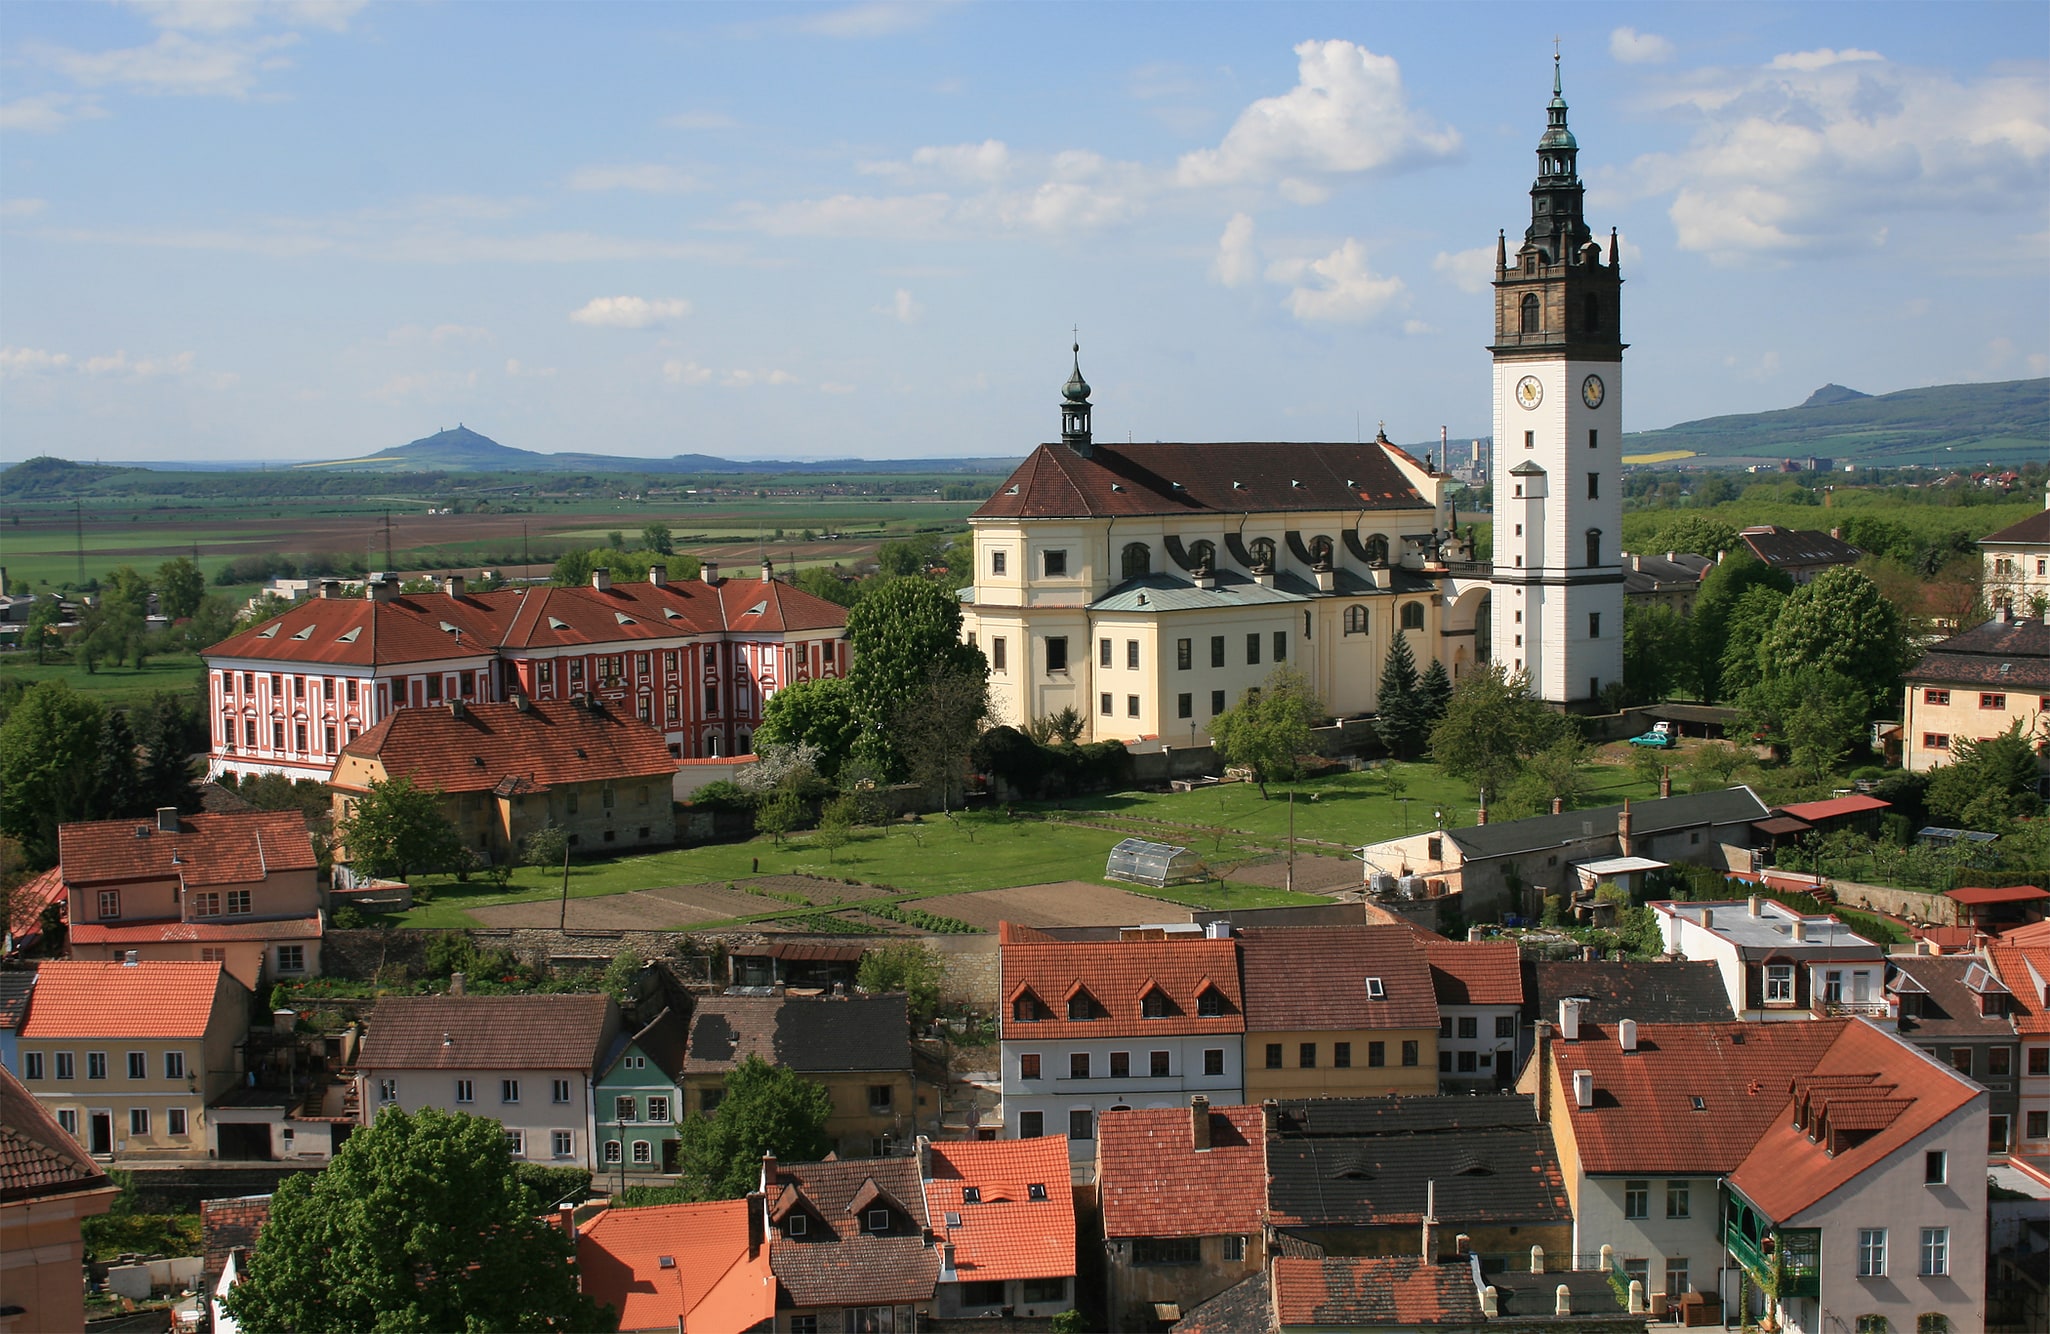 Litoměřice, Czech Republic